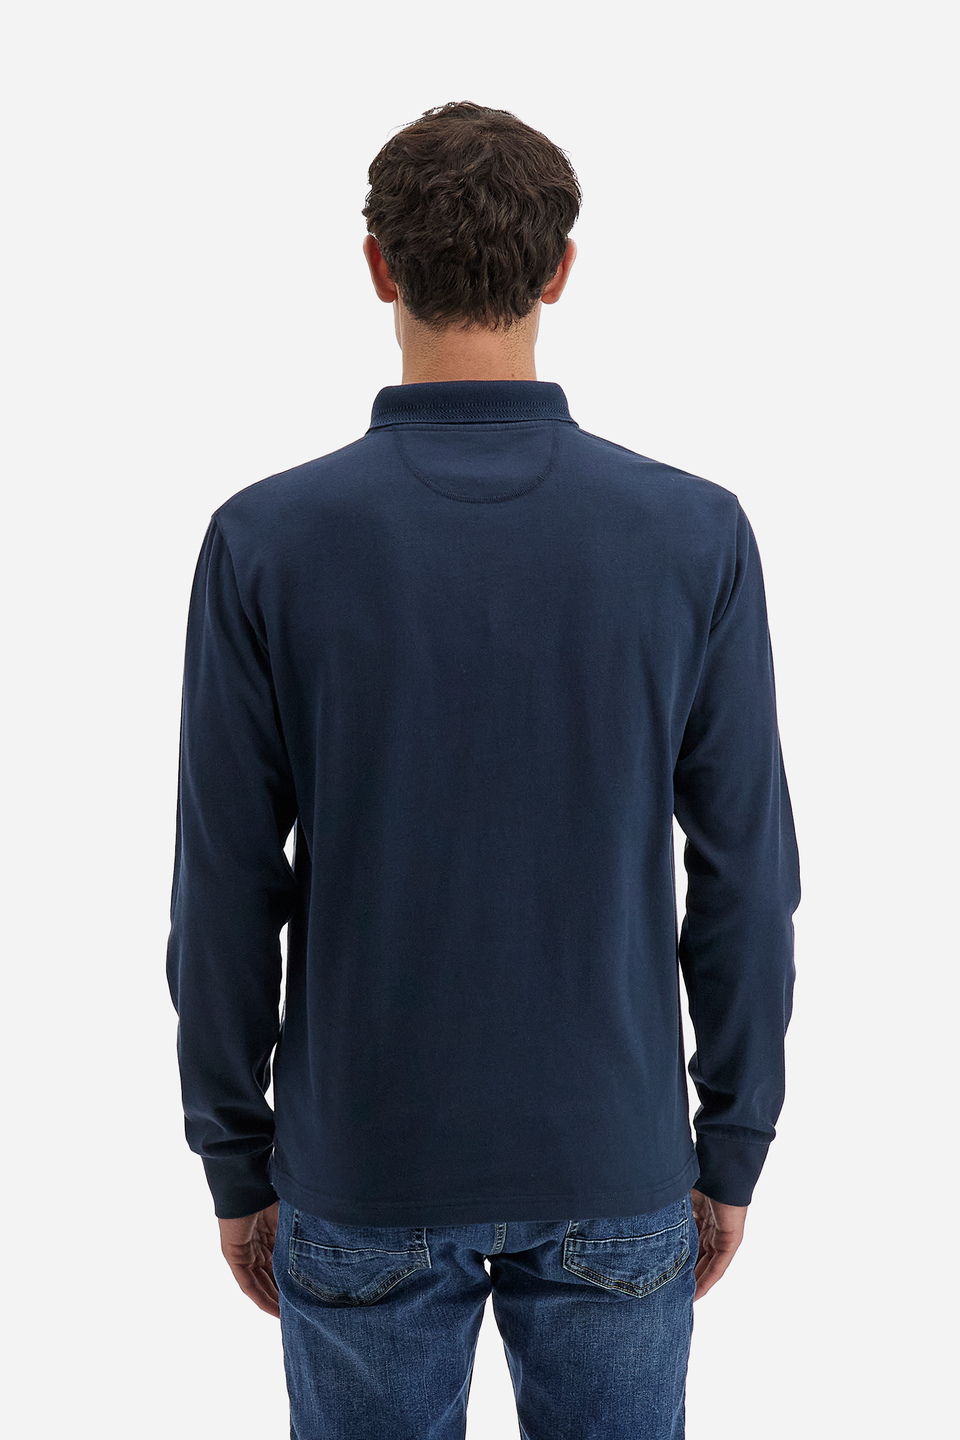 Polo Academy men's long-sleeved polo shirt with small contrasting collar logo - Vardis | La Martina - Official Online Shop